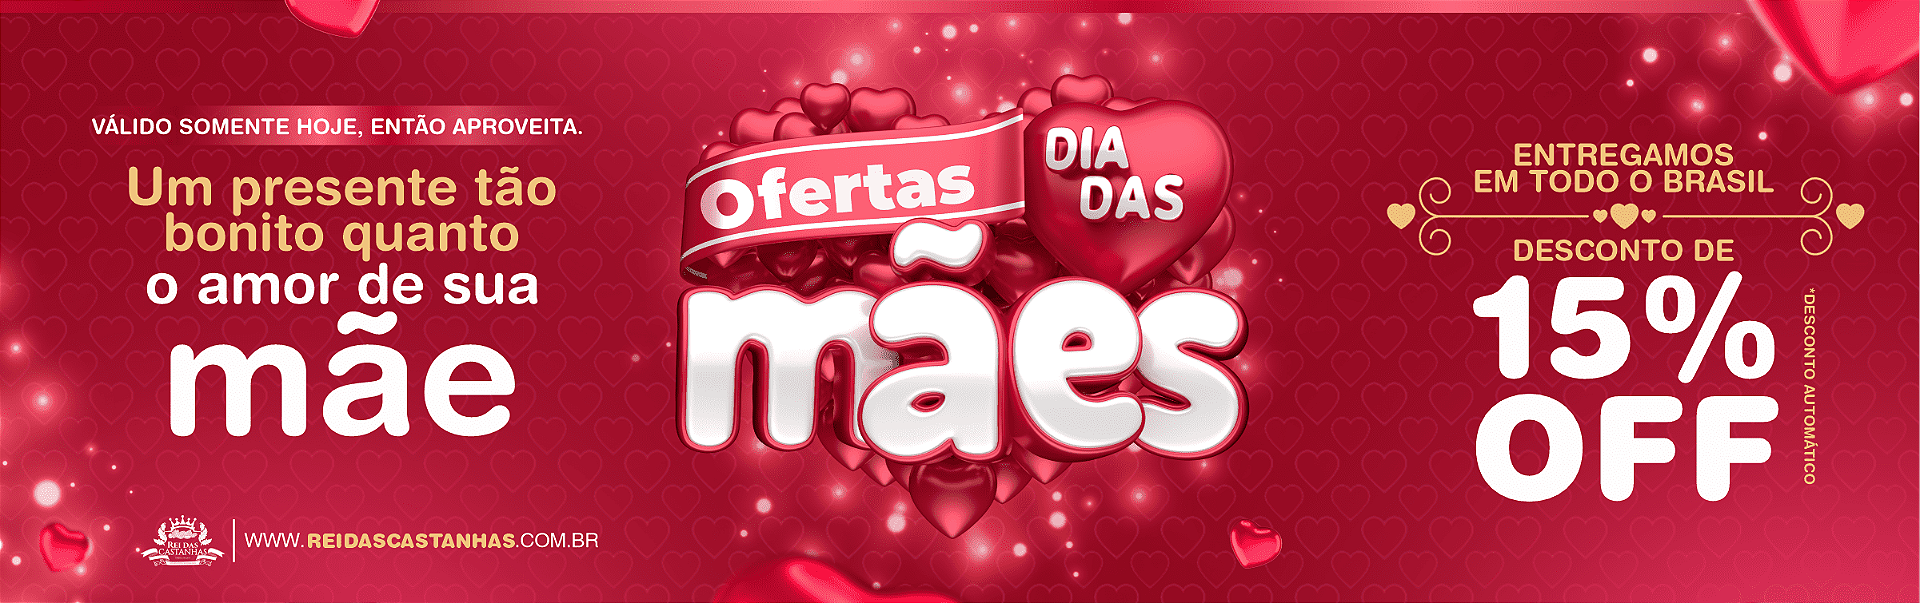 DIA_DAS_MAES